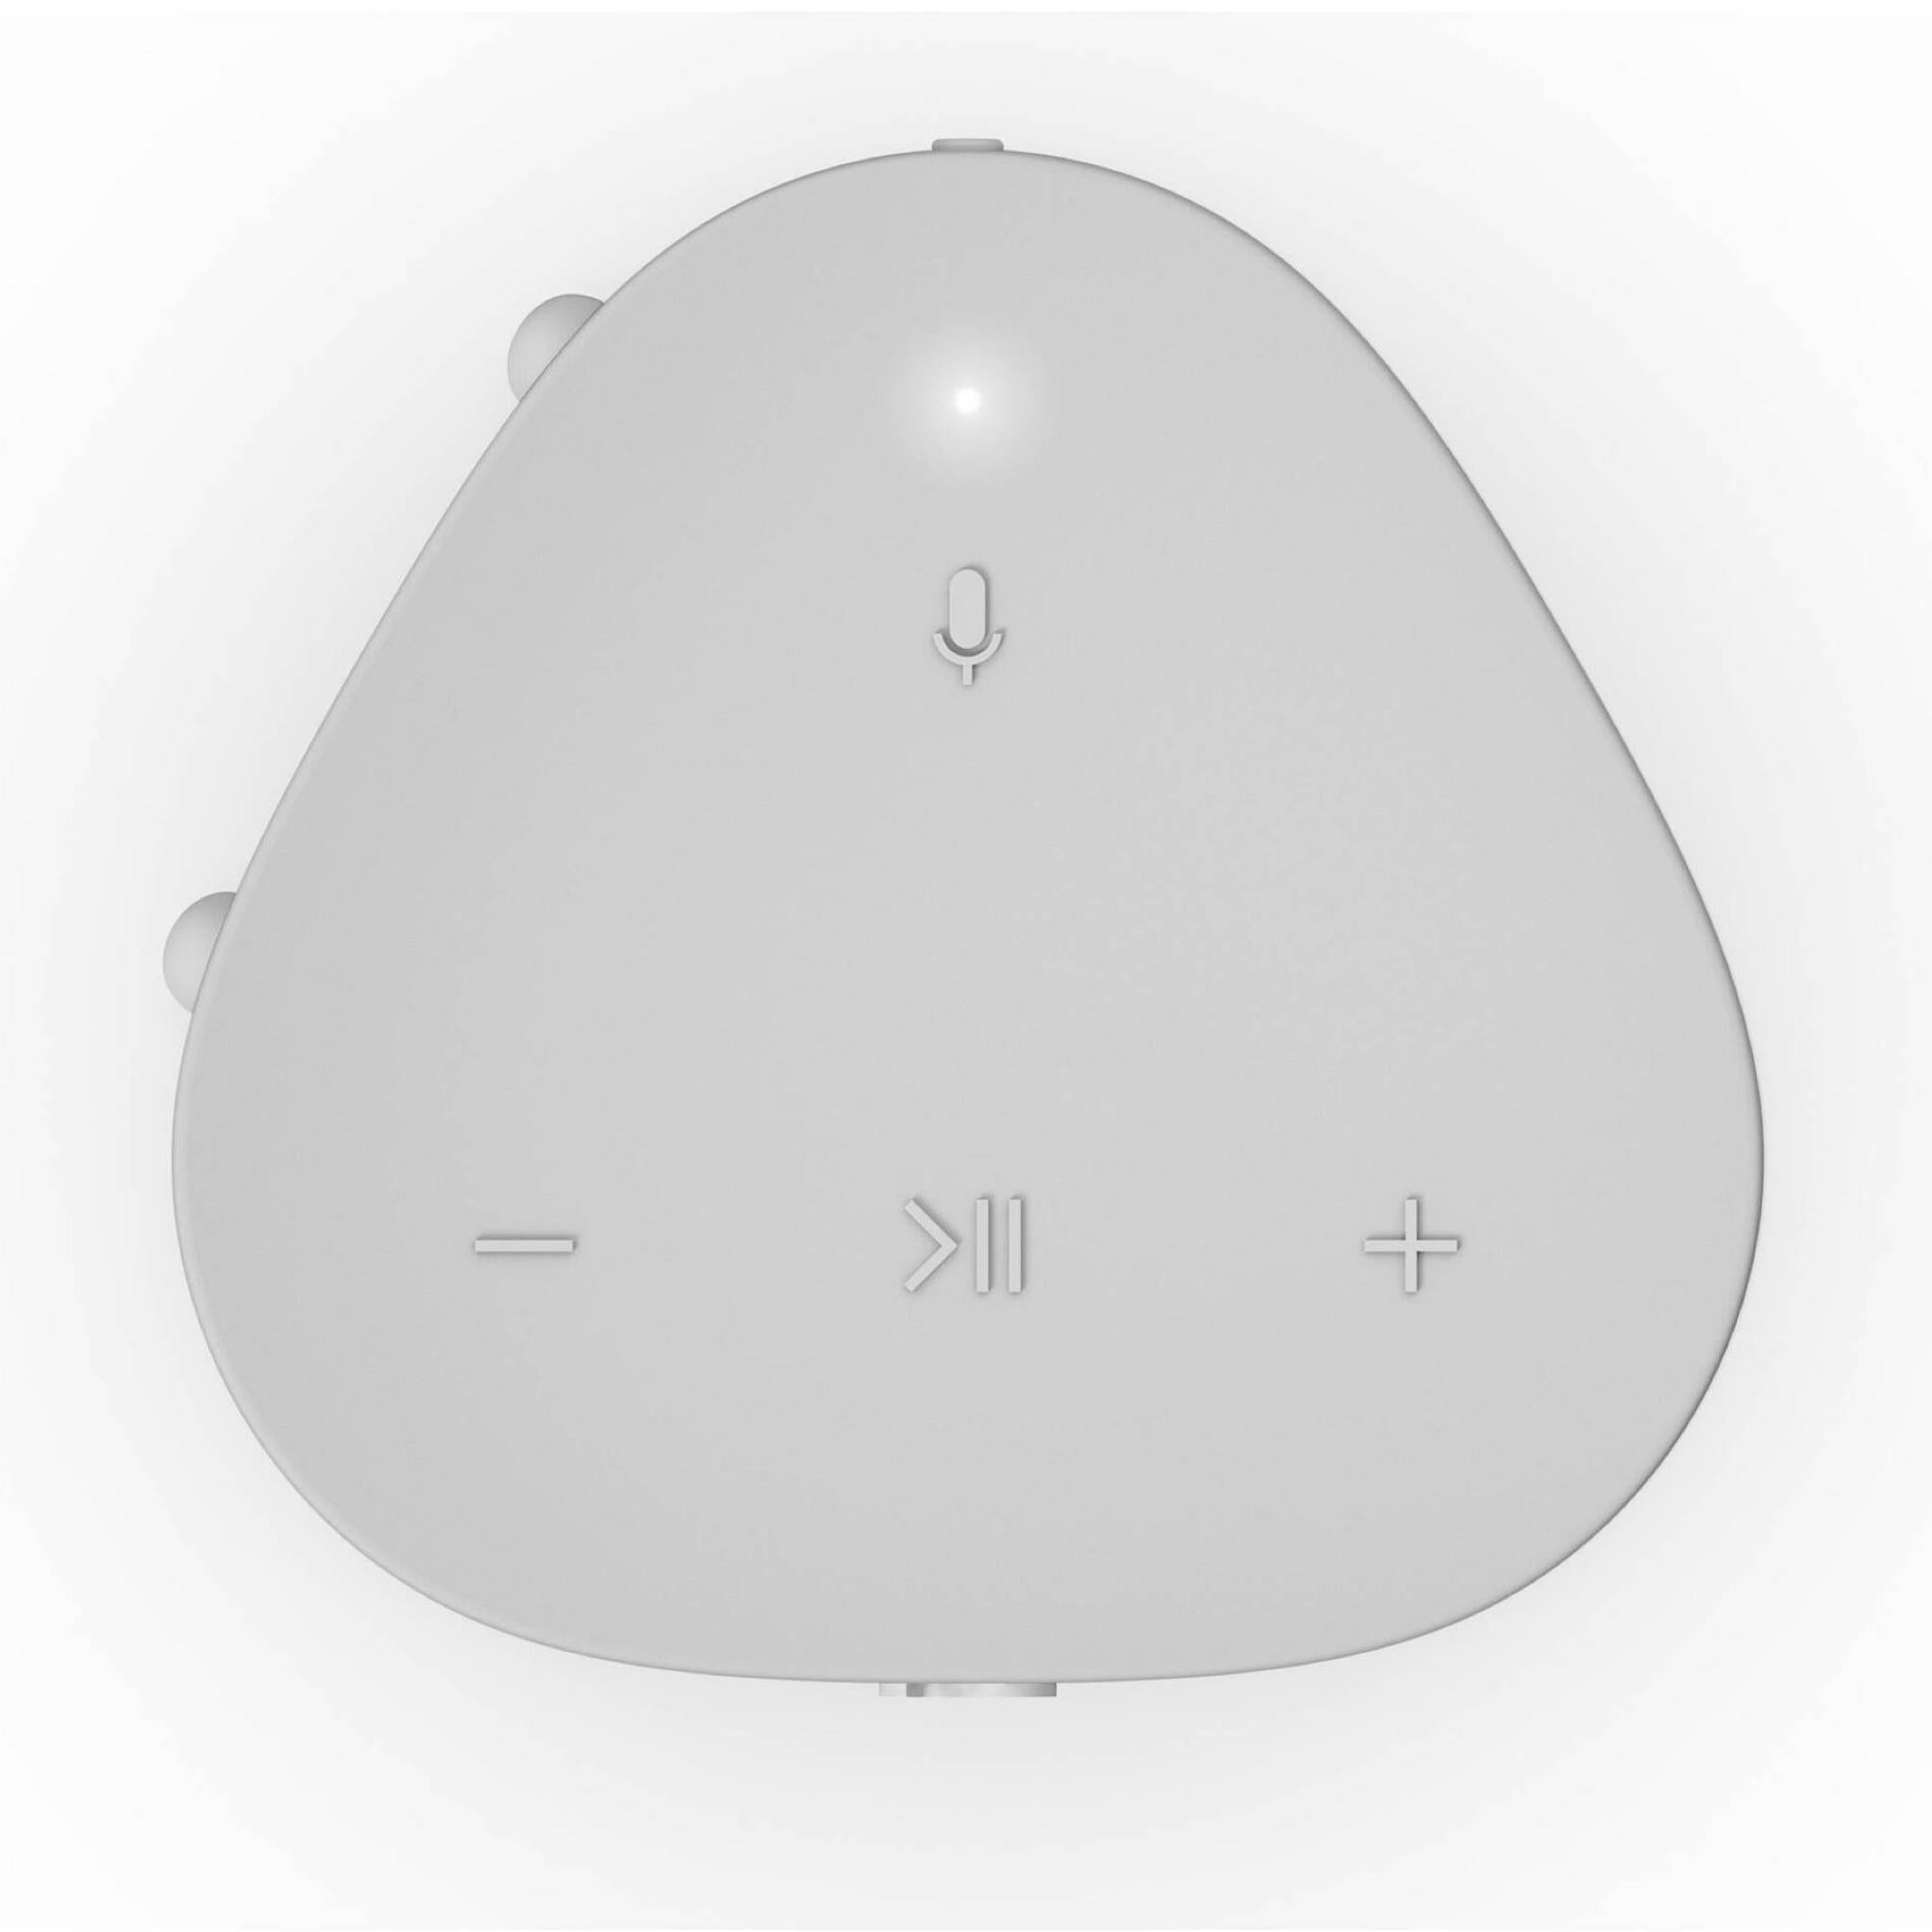 Sonos Roam - Portable Waterproof Speaker - AVStore